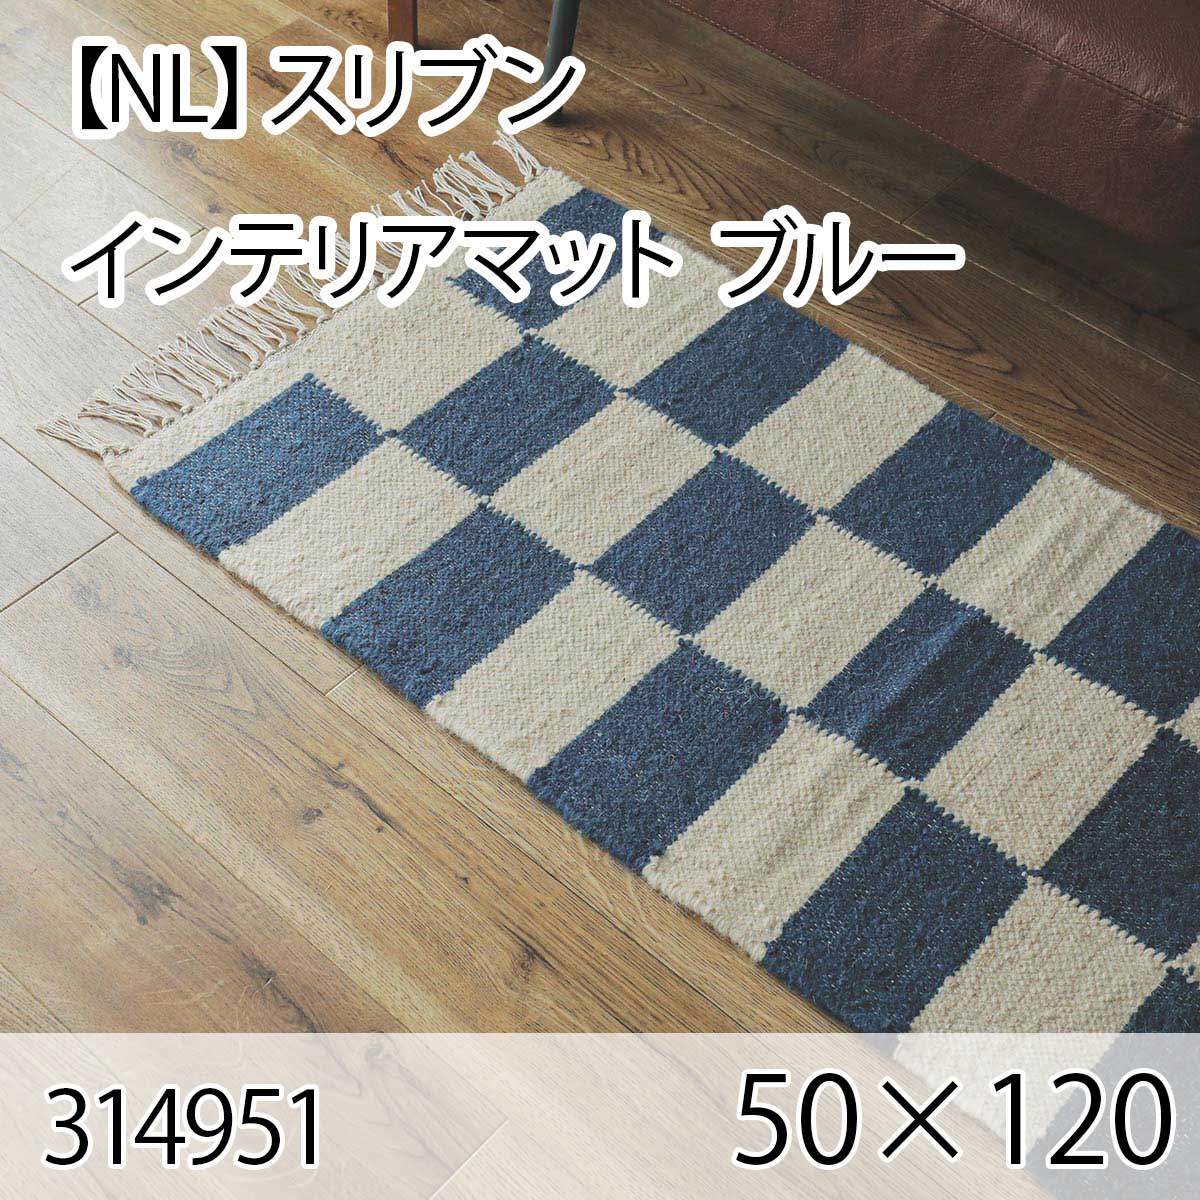 【NL】スリブン インテリアマット 50cmx120cm ブルー